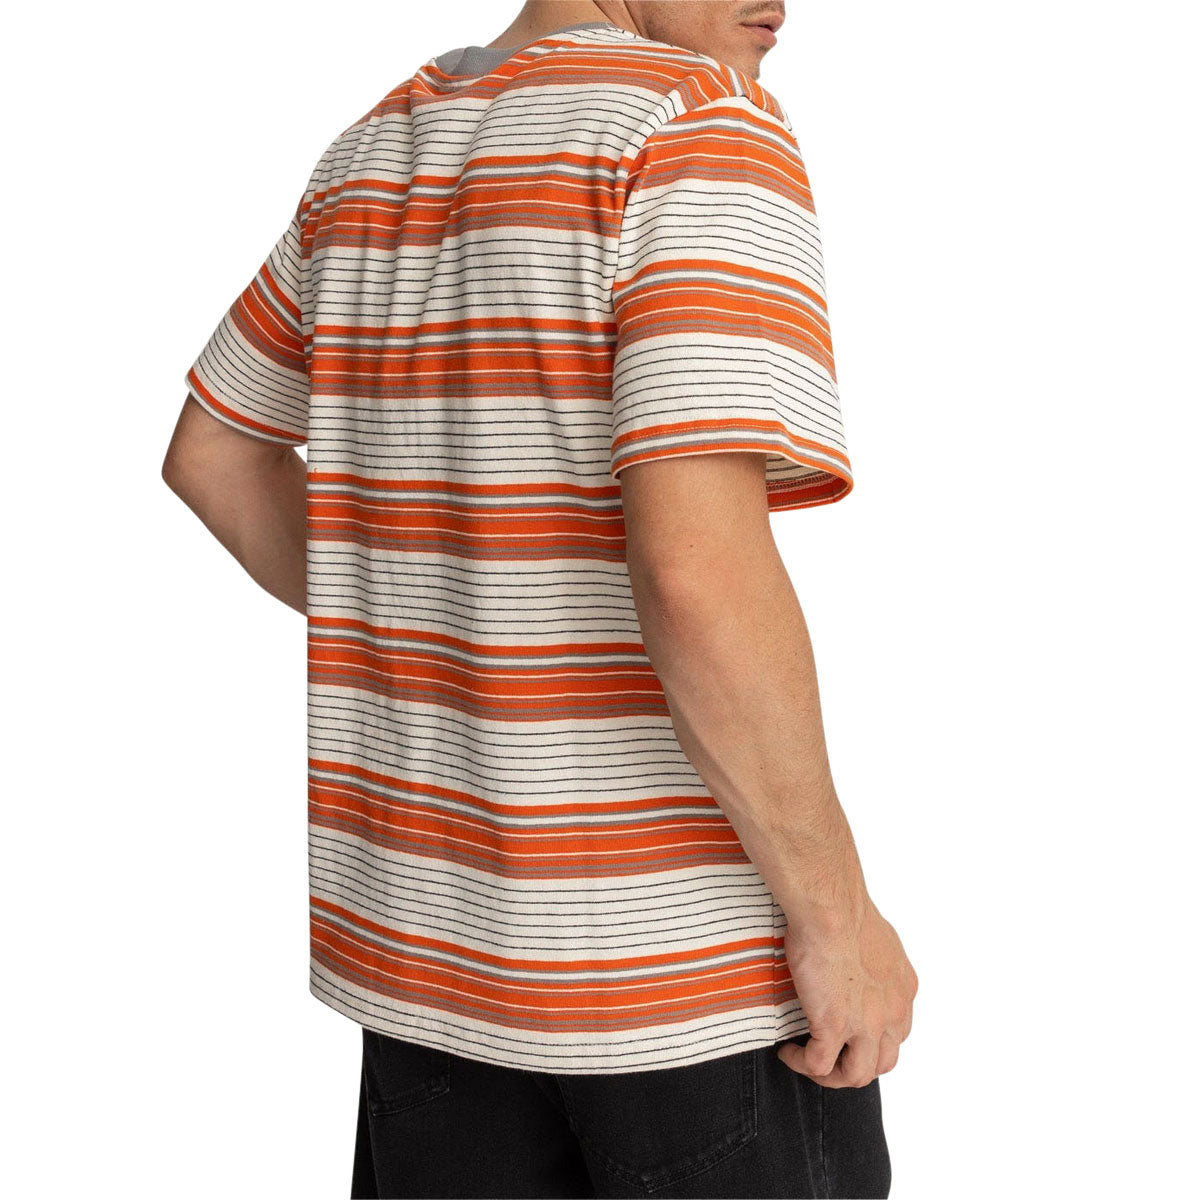 Rhythm Vintage Stripe T-Shirt - Natural image 3